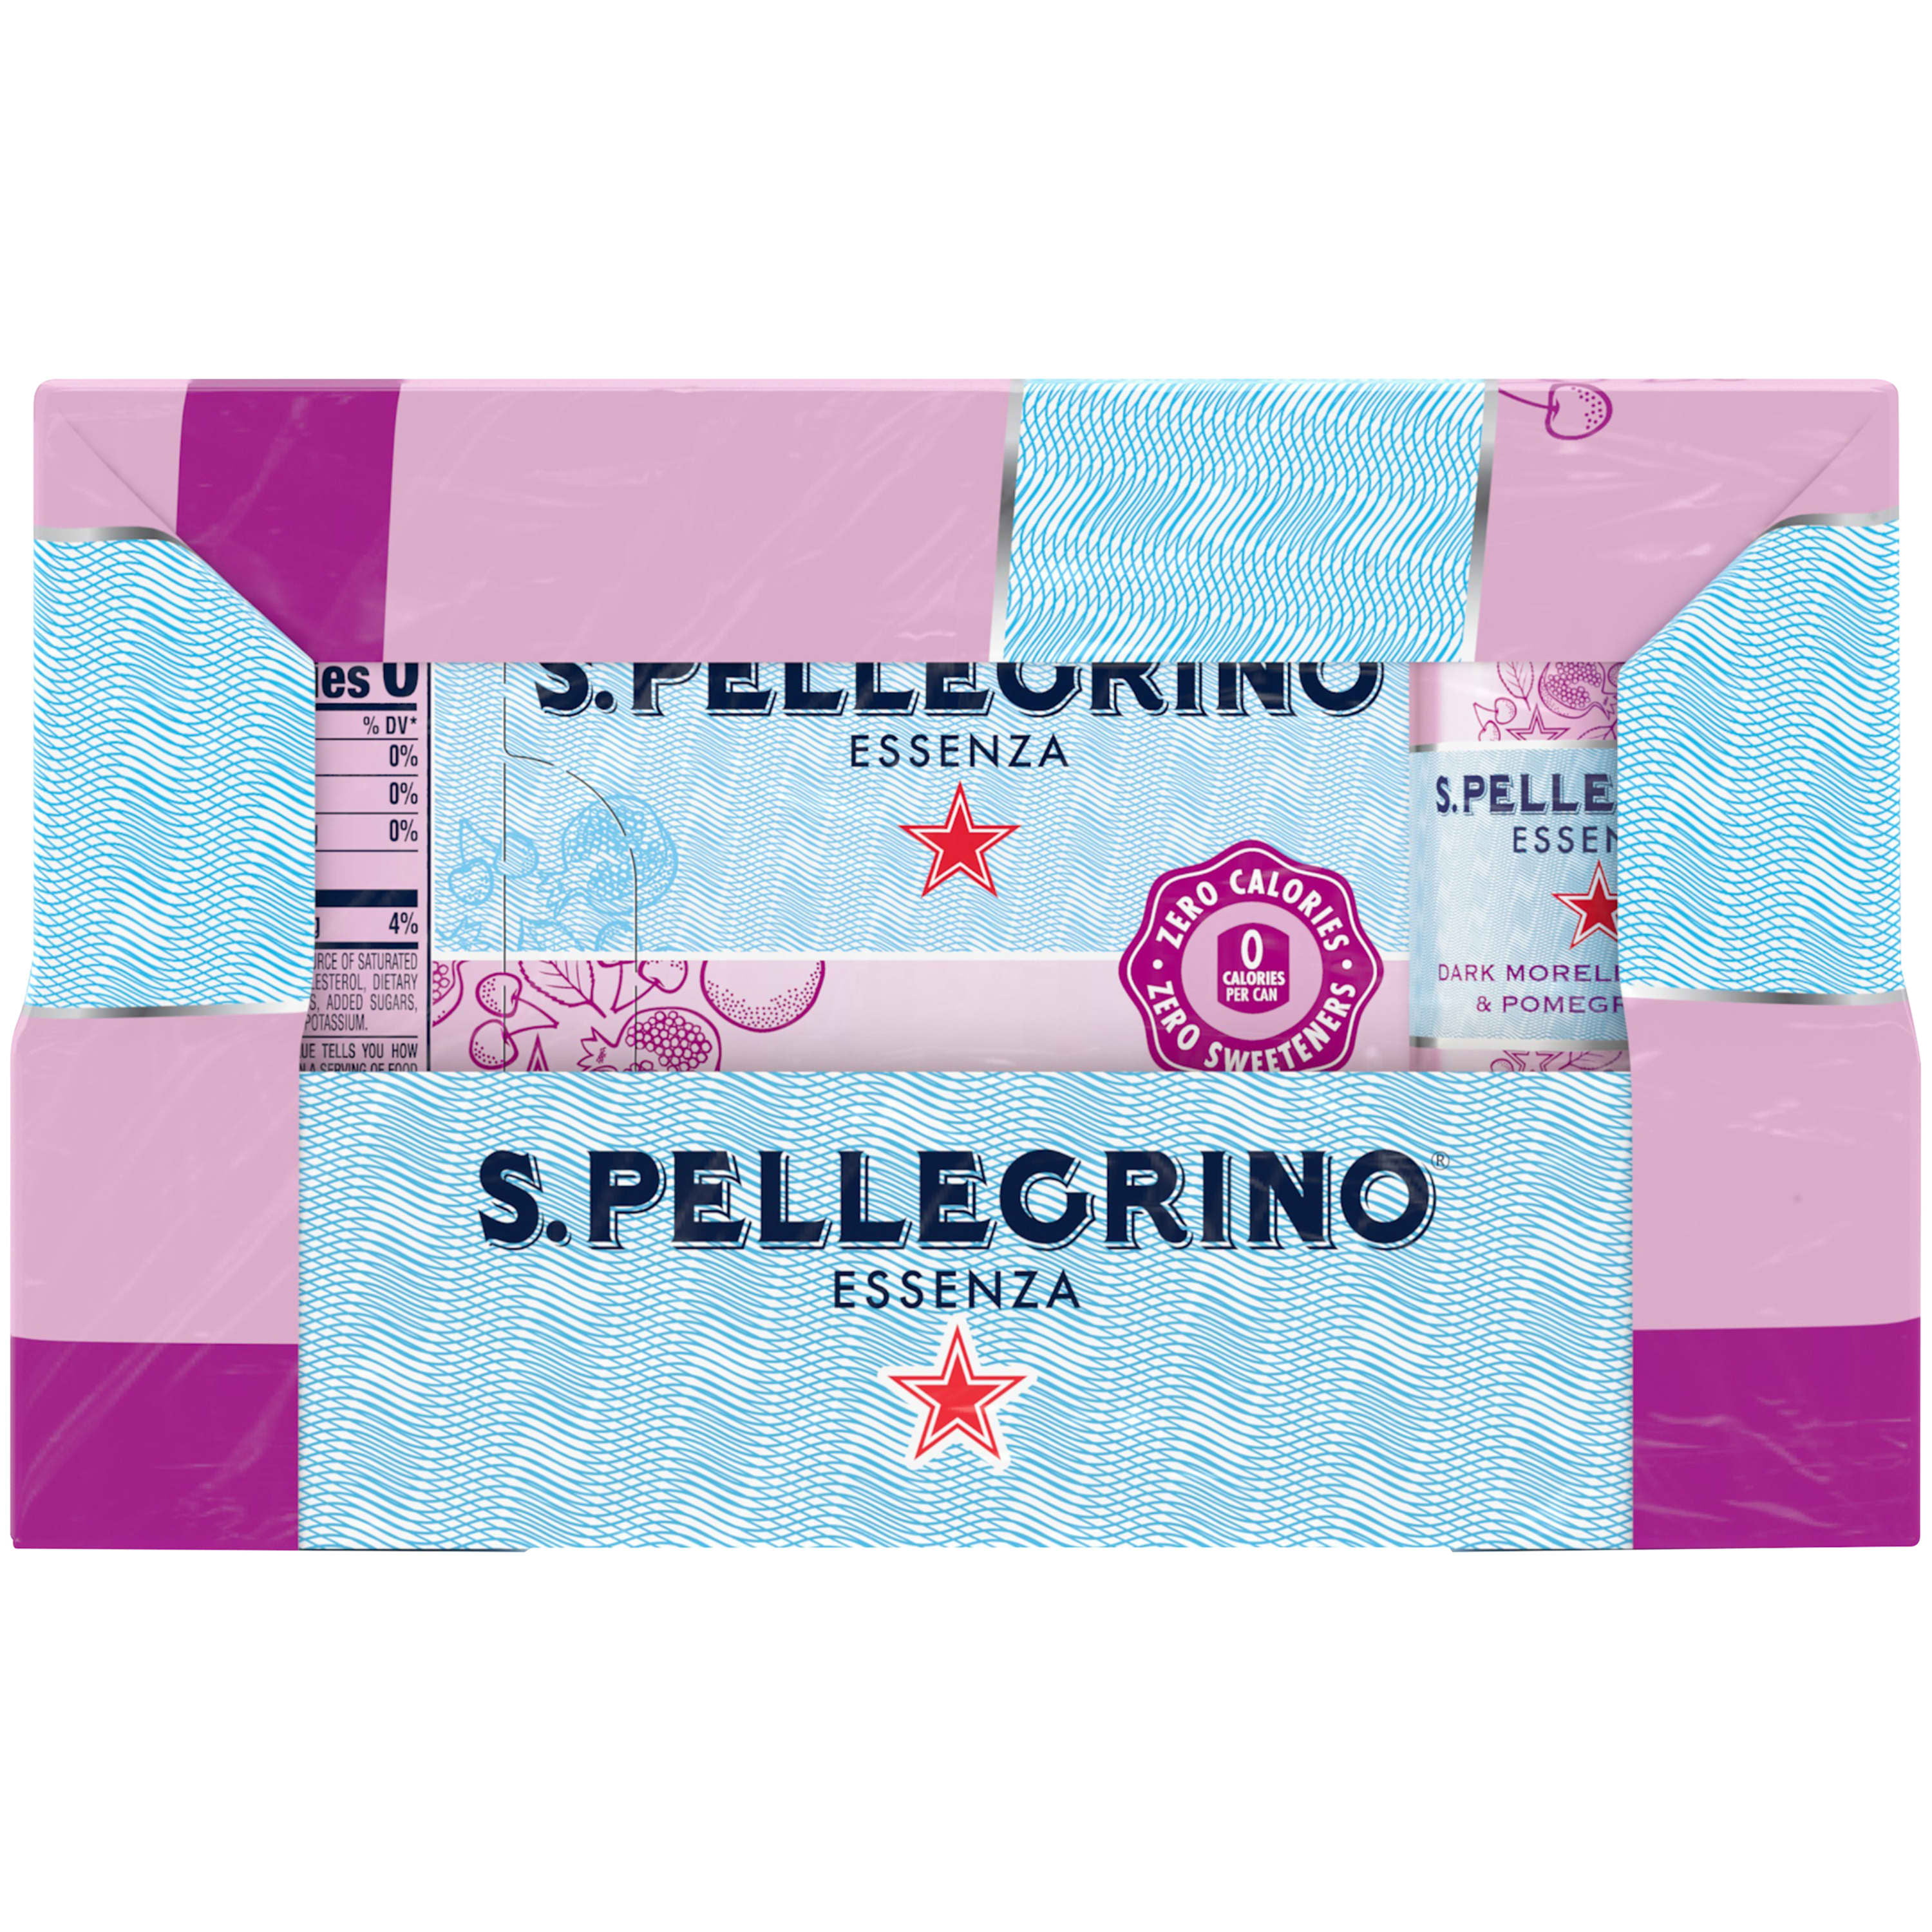 S.Pellegrino Essenza Dark Morello Cherry and Pomegranate Flavored Mineral Water with Natural CO2 Added, 267.6 fl oz - 2